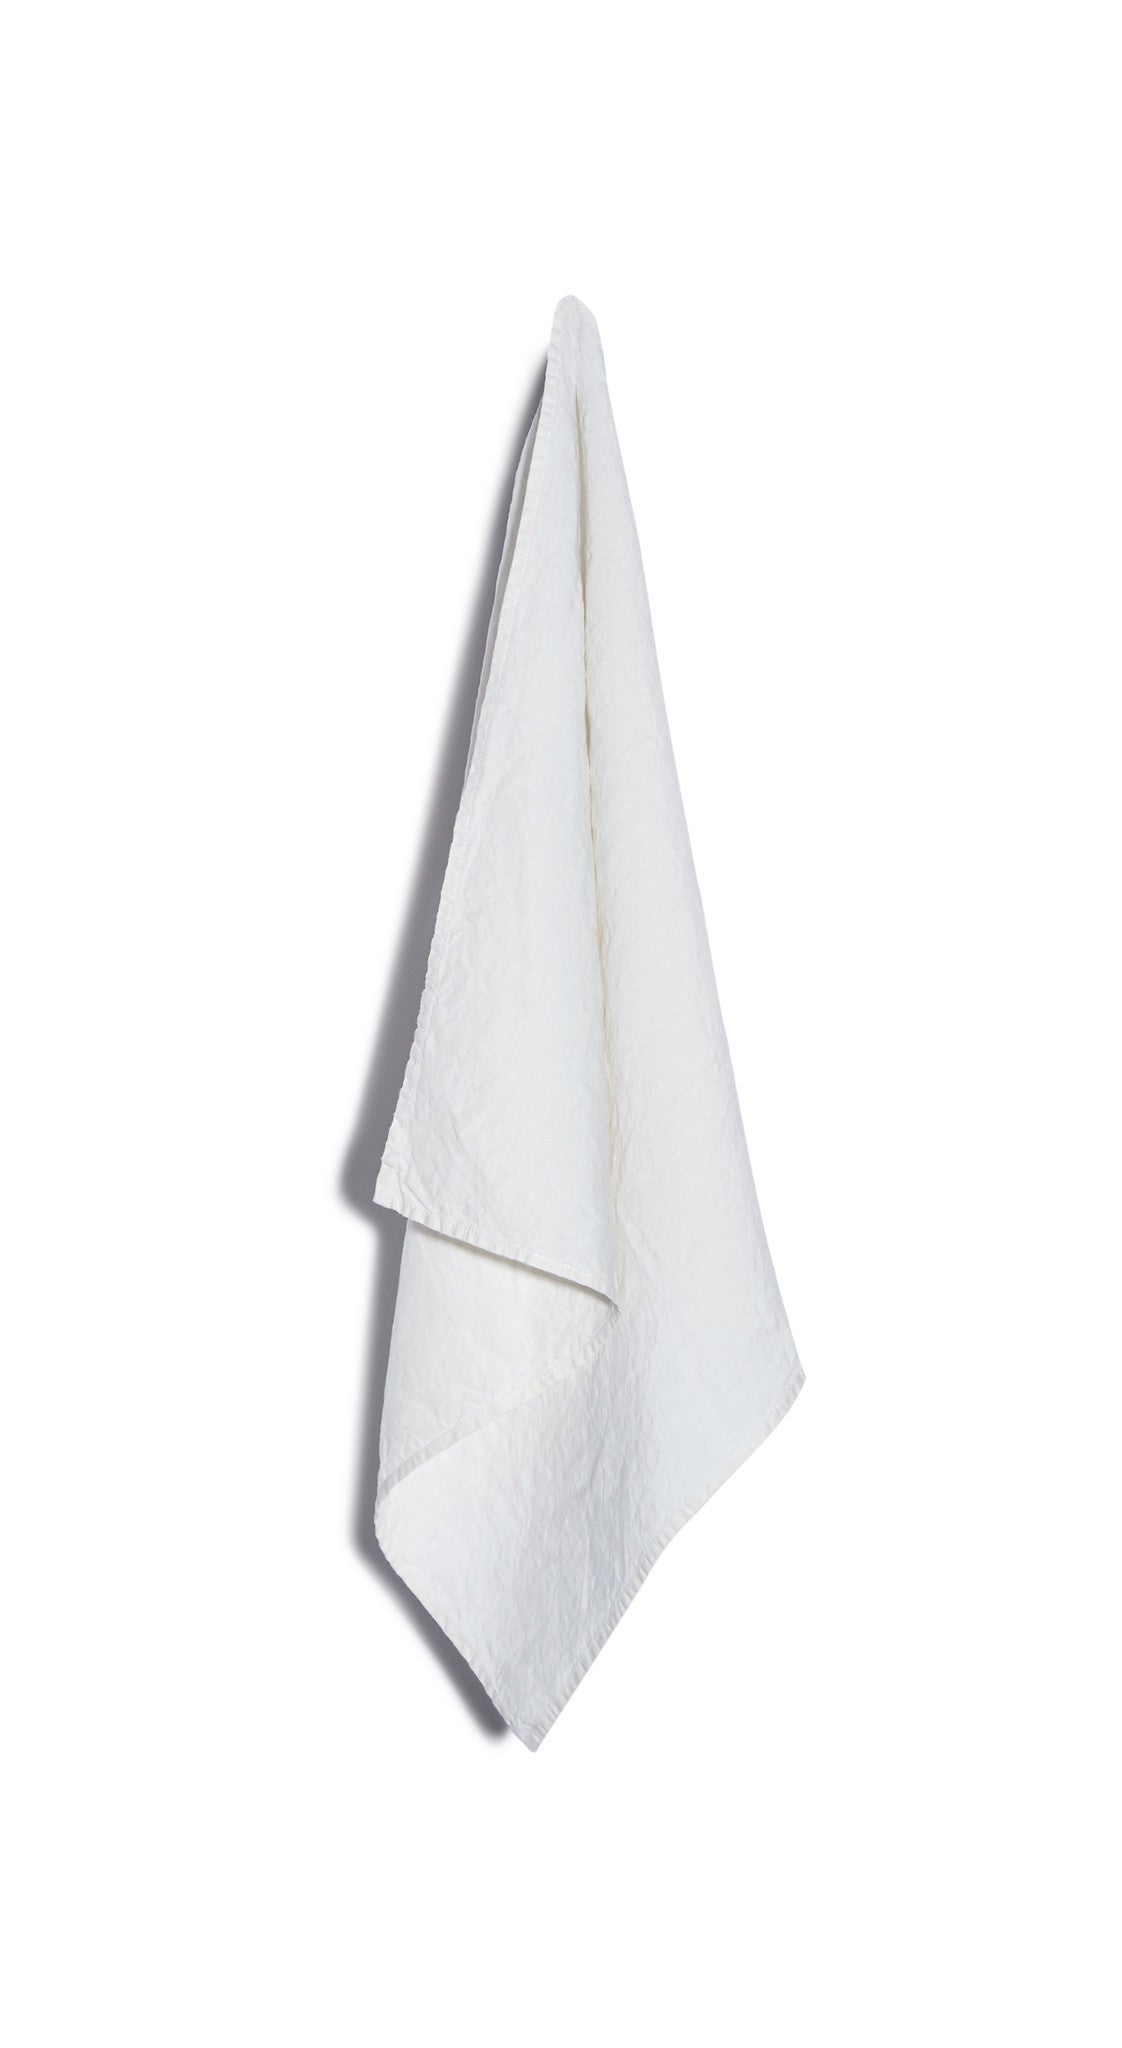 Plain Linen Napkin in White, 50x50cm